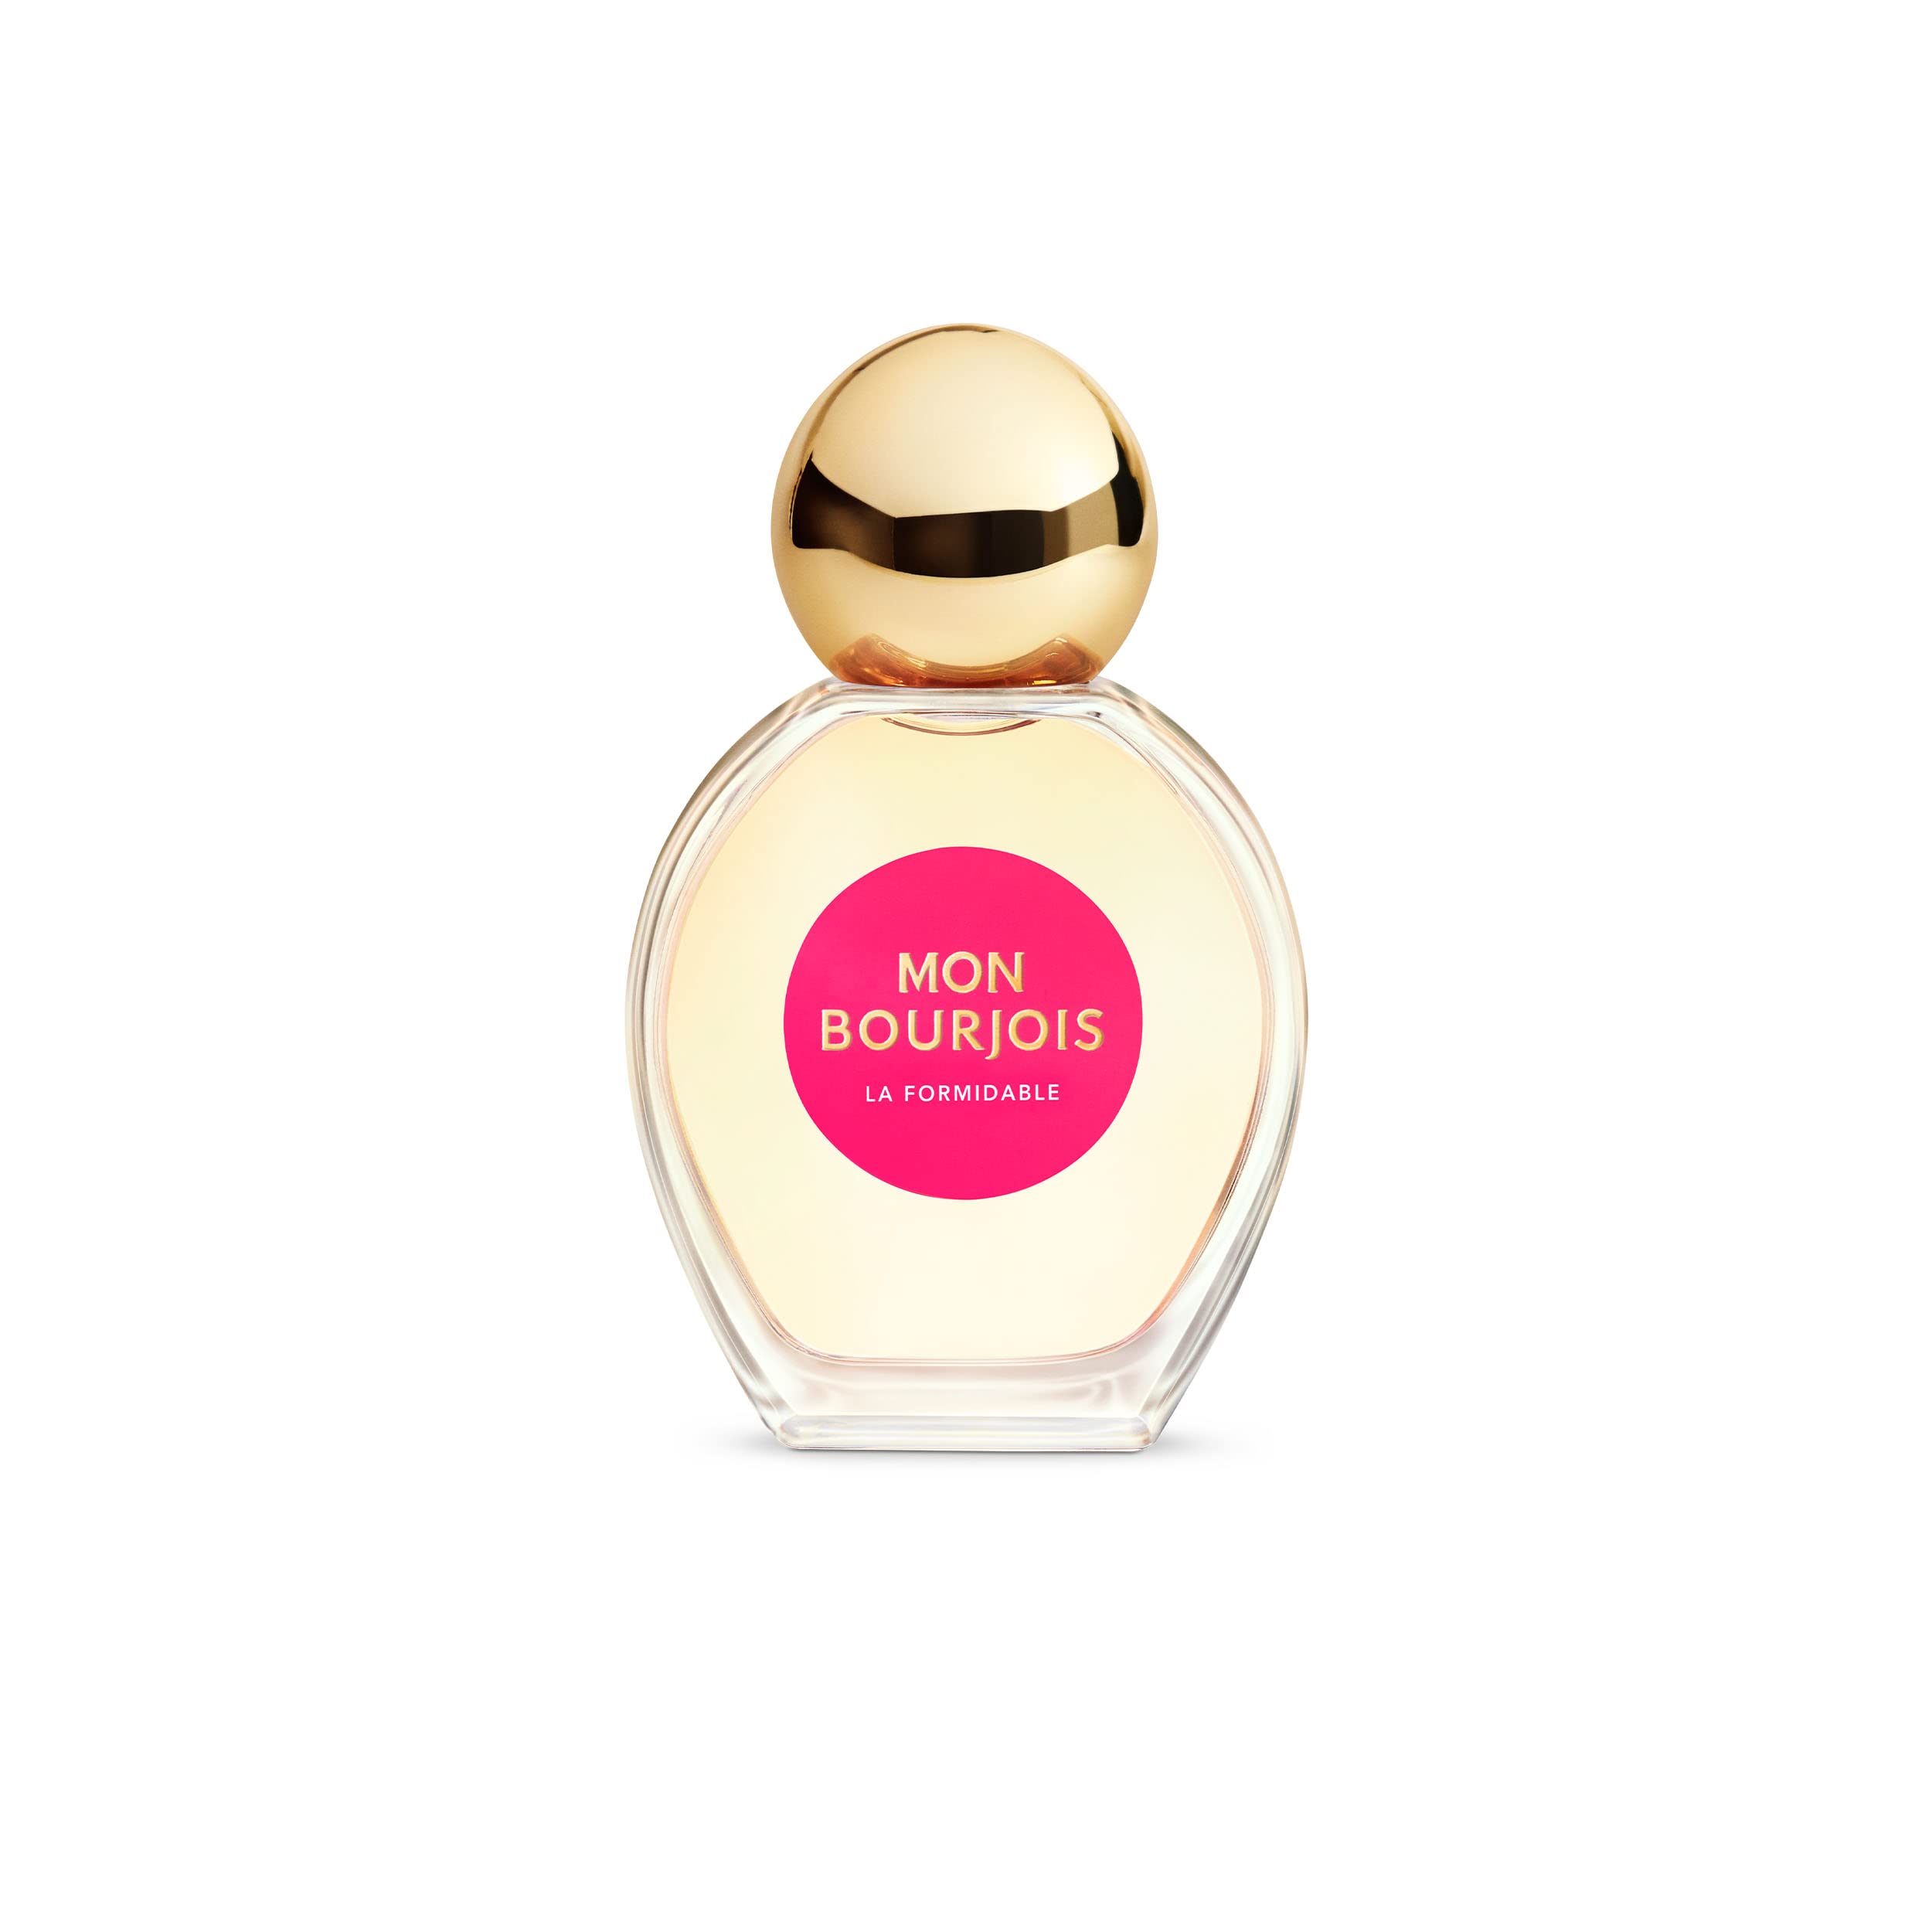 Mon Bourjois La Formidable Eau de Parfum, aromatischer Chypre-Duft für Damen, 50ml